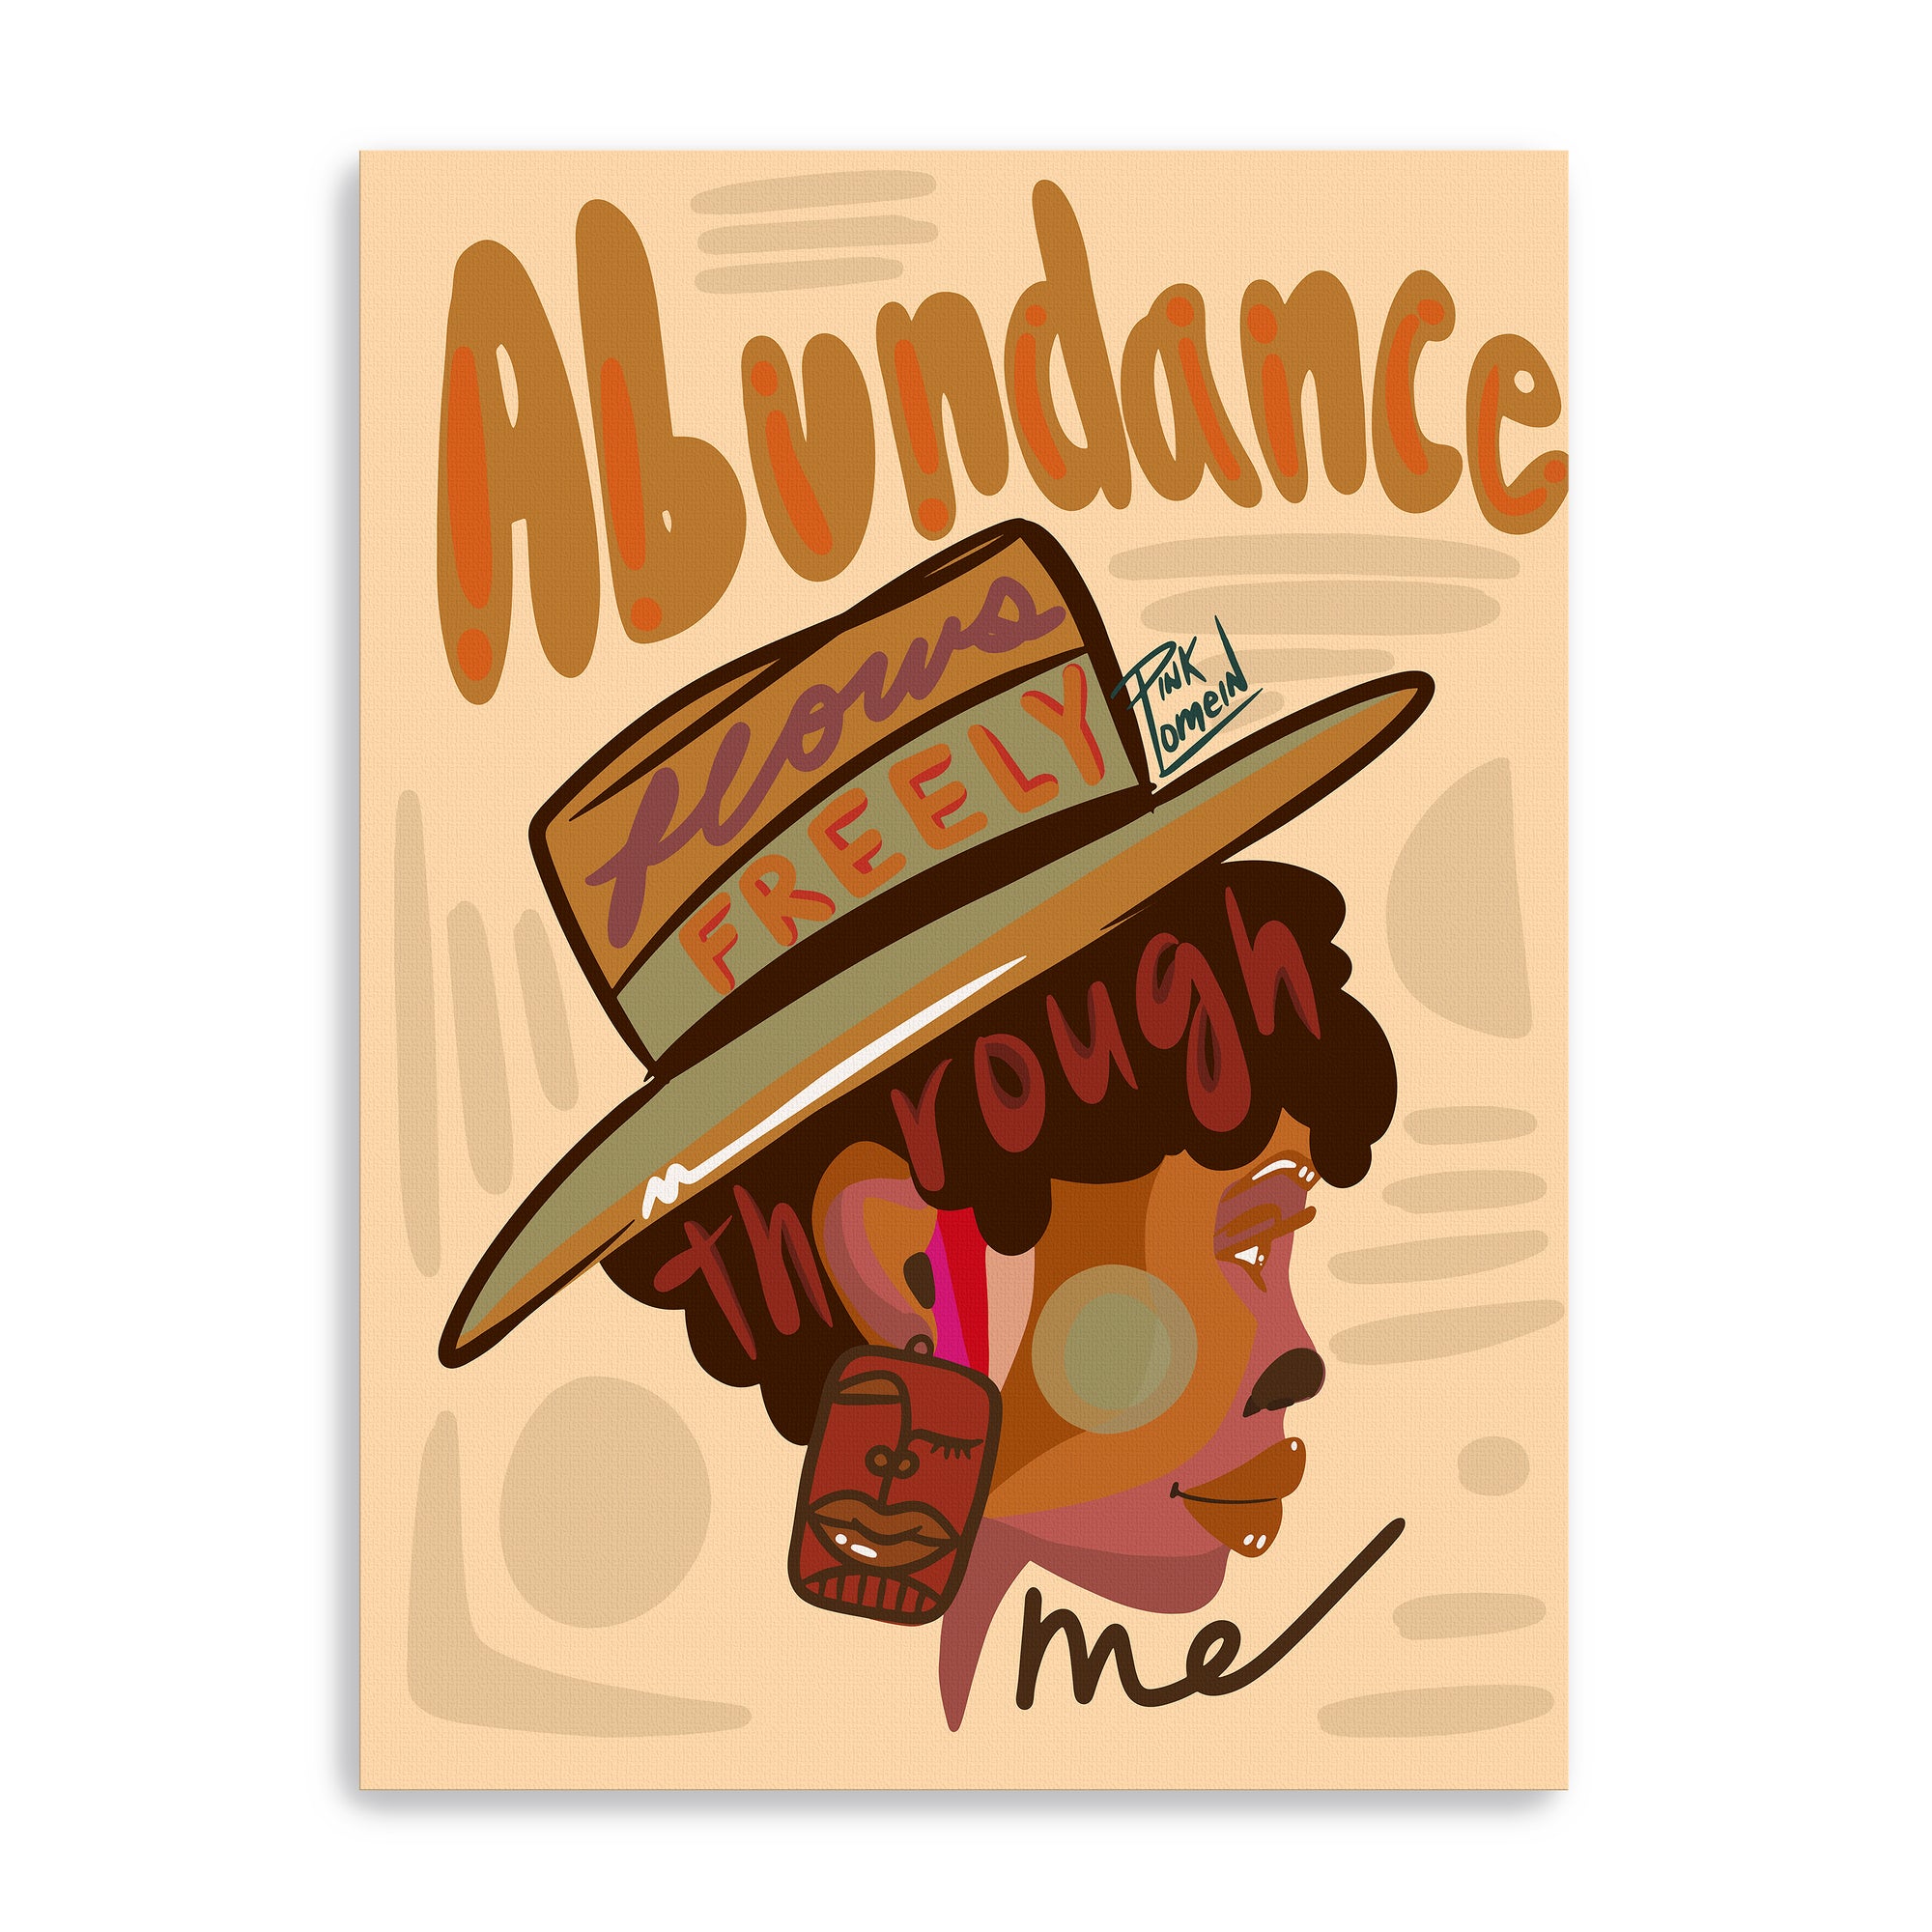 Abundance flows freely through me hat paper print